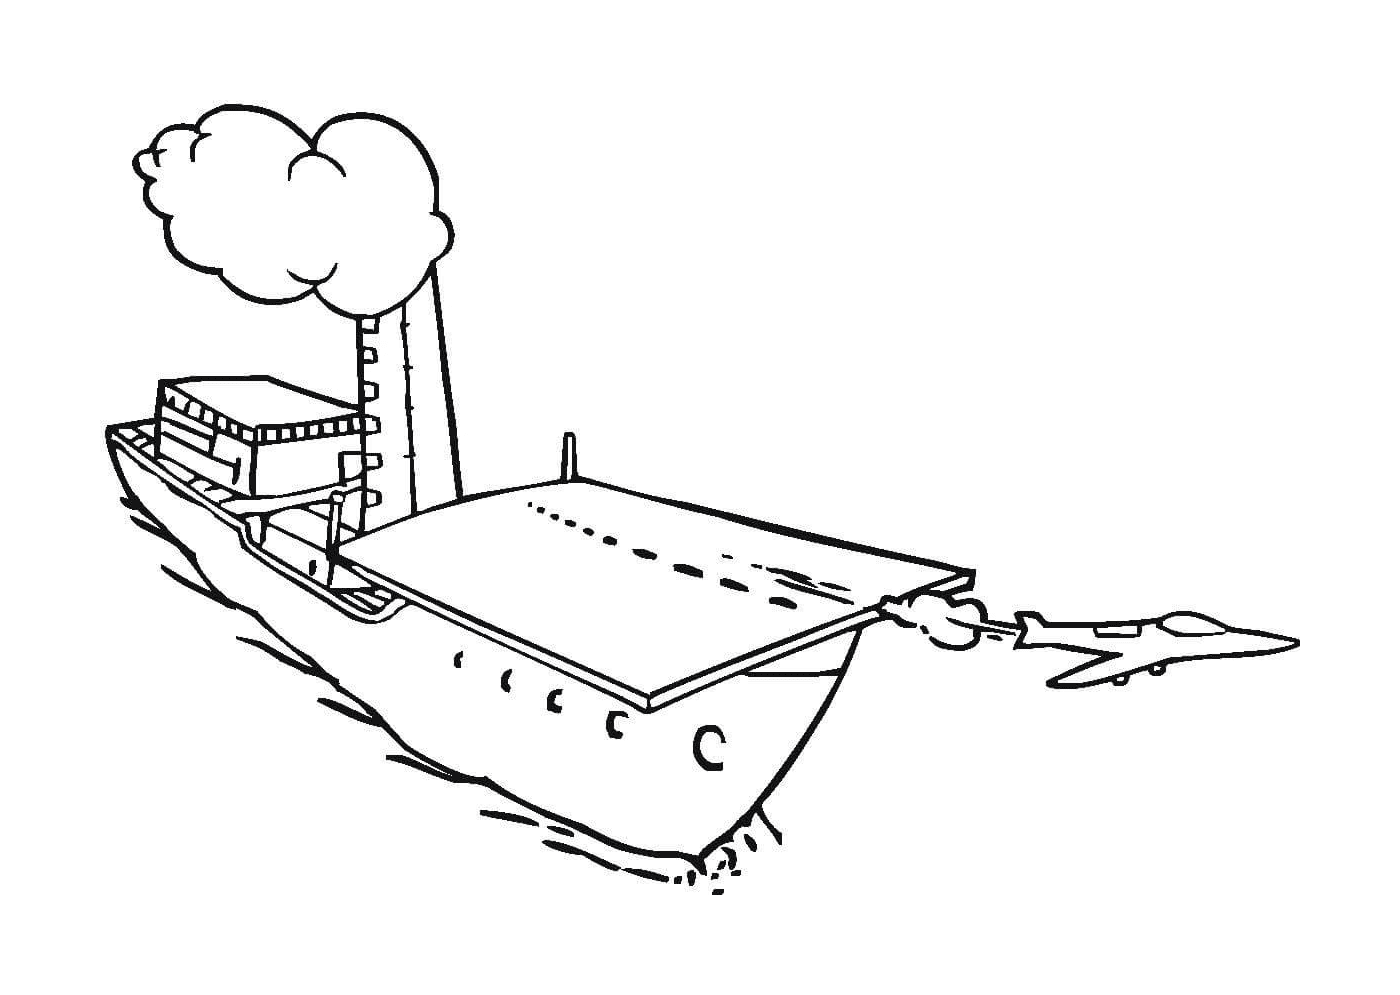  Un barco en el agua 